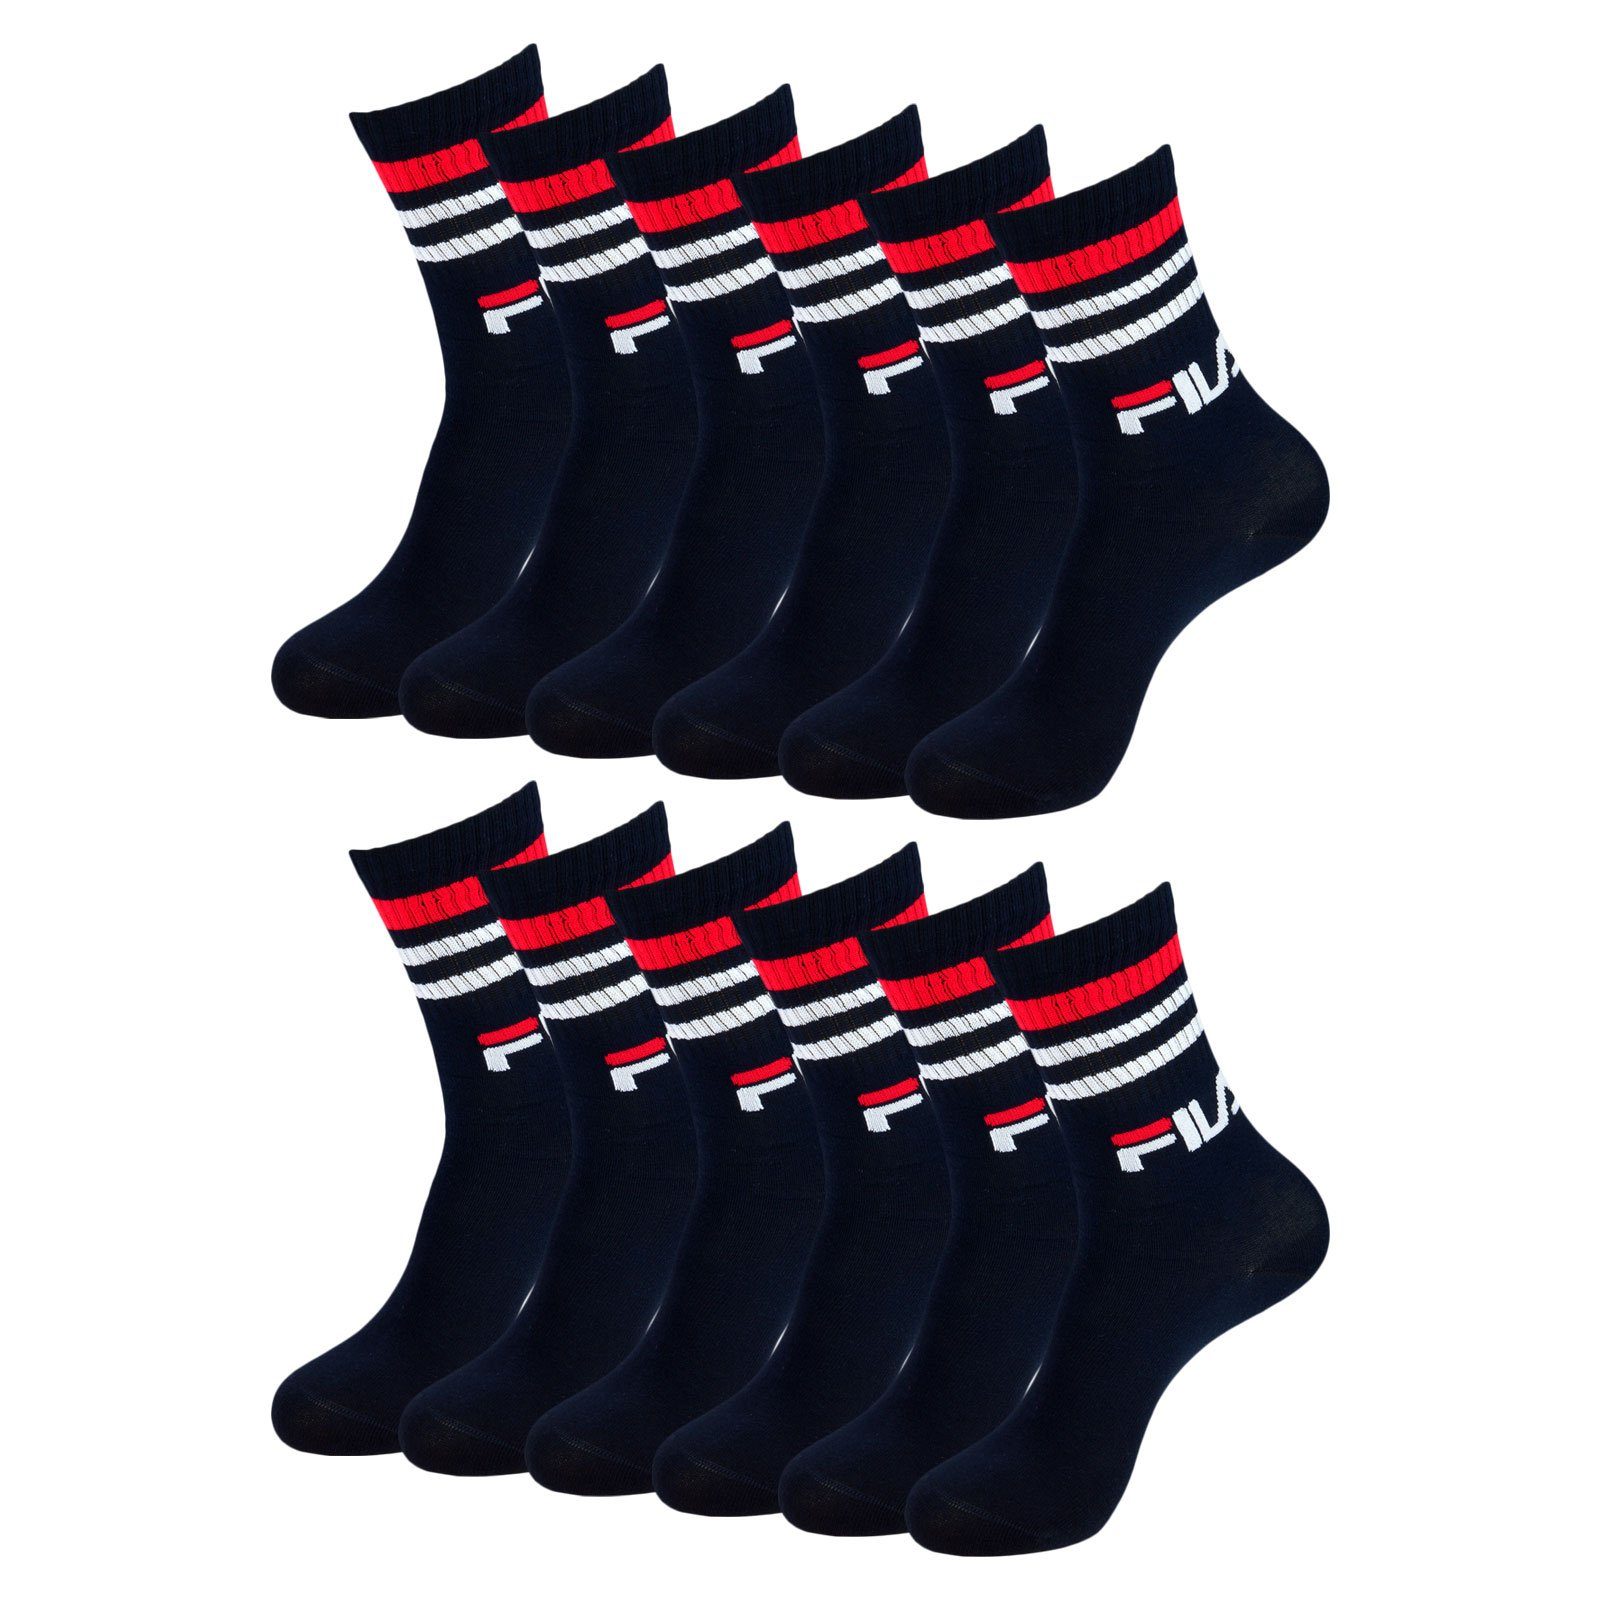 Fila Langsocken Crow Socks Calze (6-Paar) im sportlichen Retrolook mit Rippbündchen 321 navy